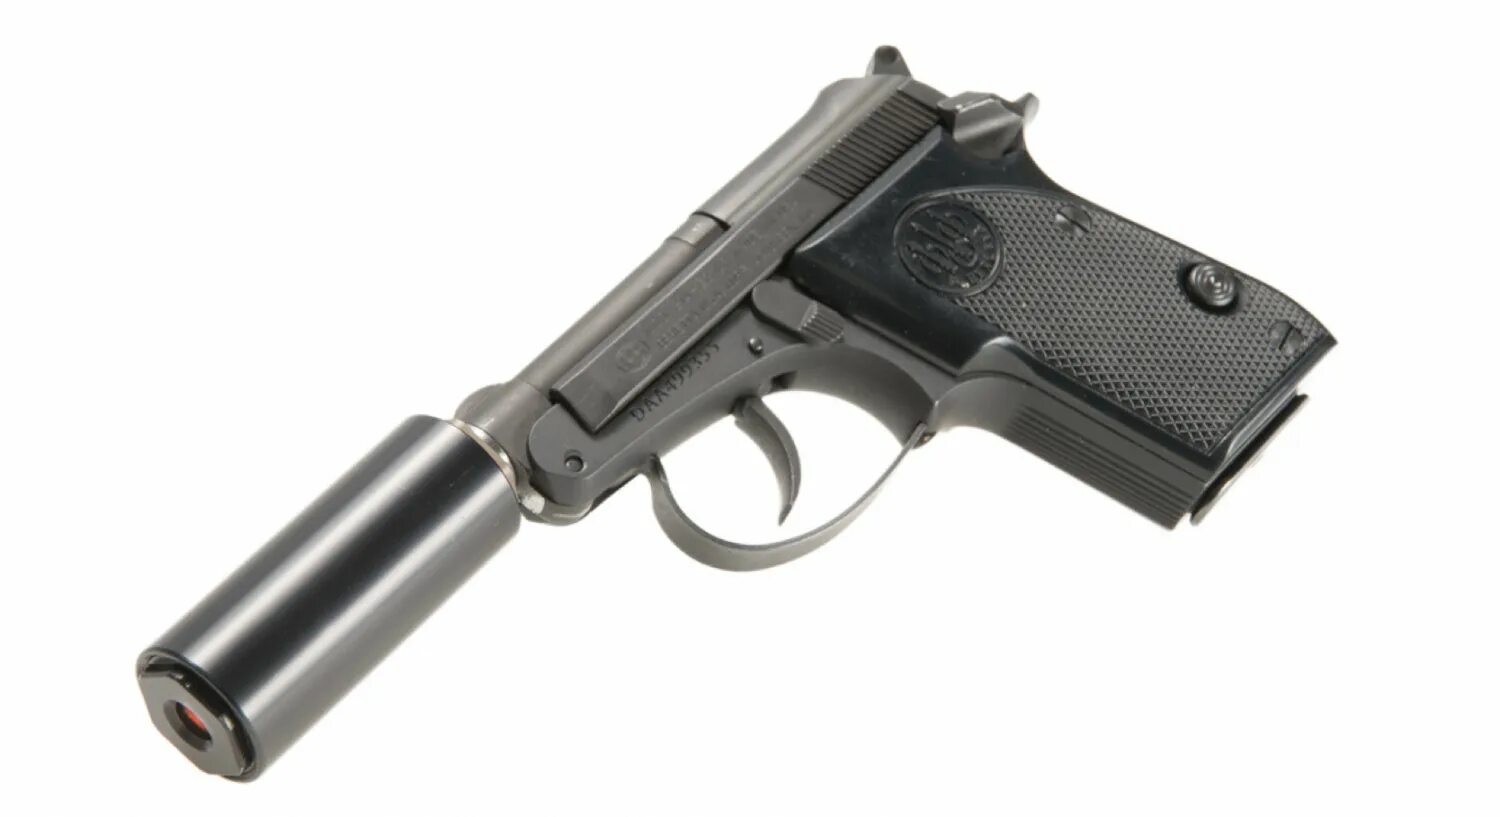 Mc gun. Beretta 22lr Silencer. Револьвер 22lr с глушителем.